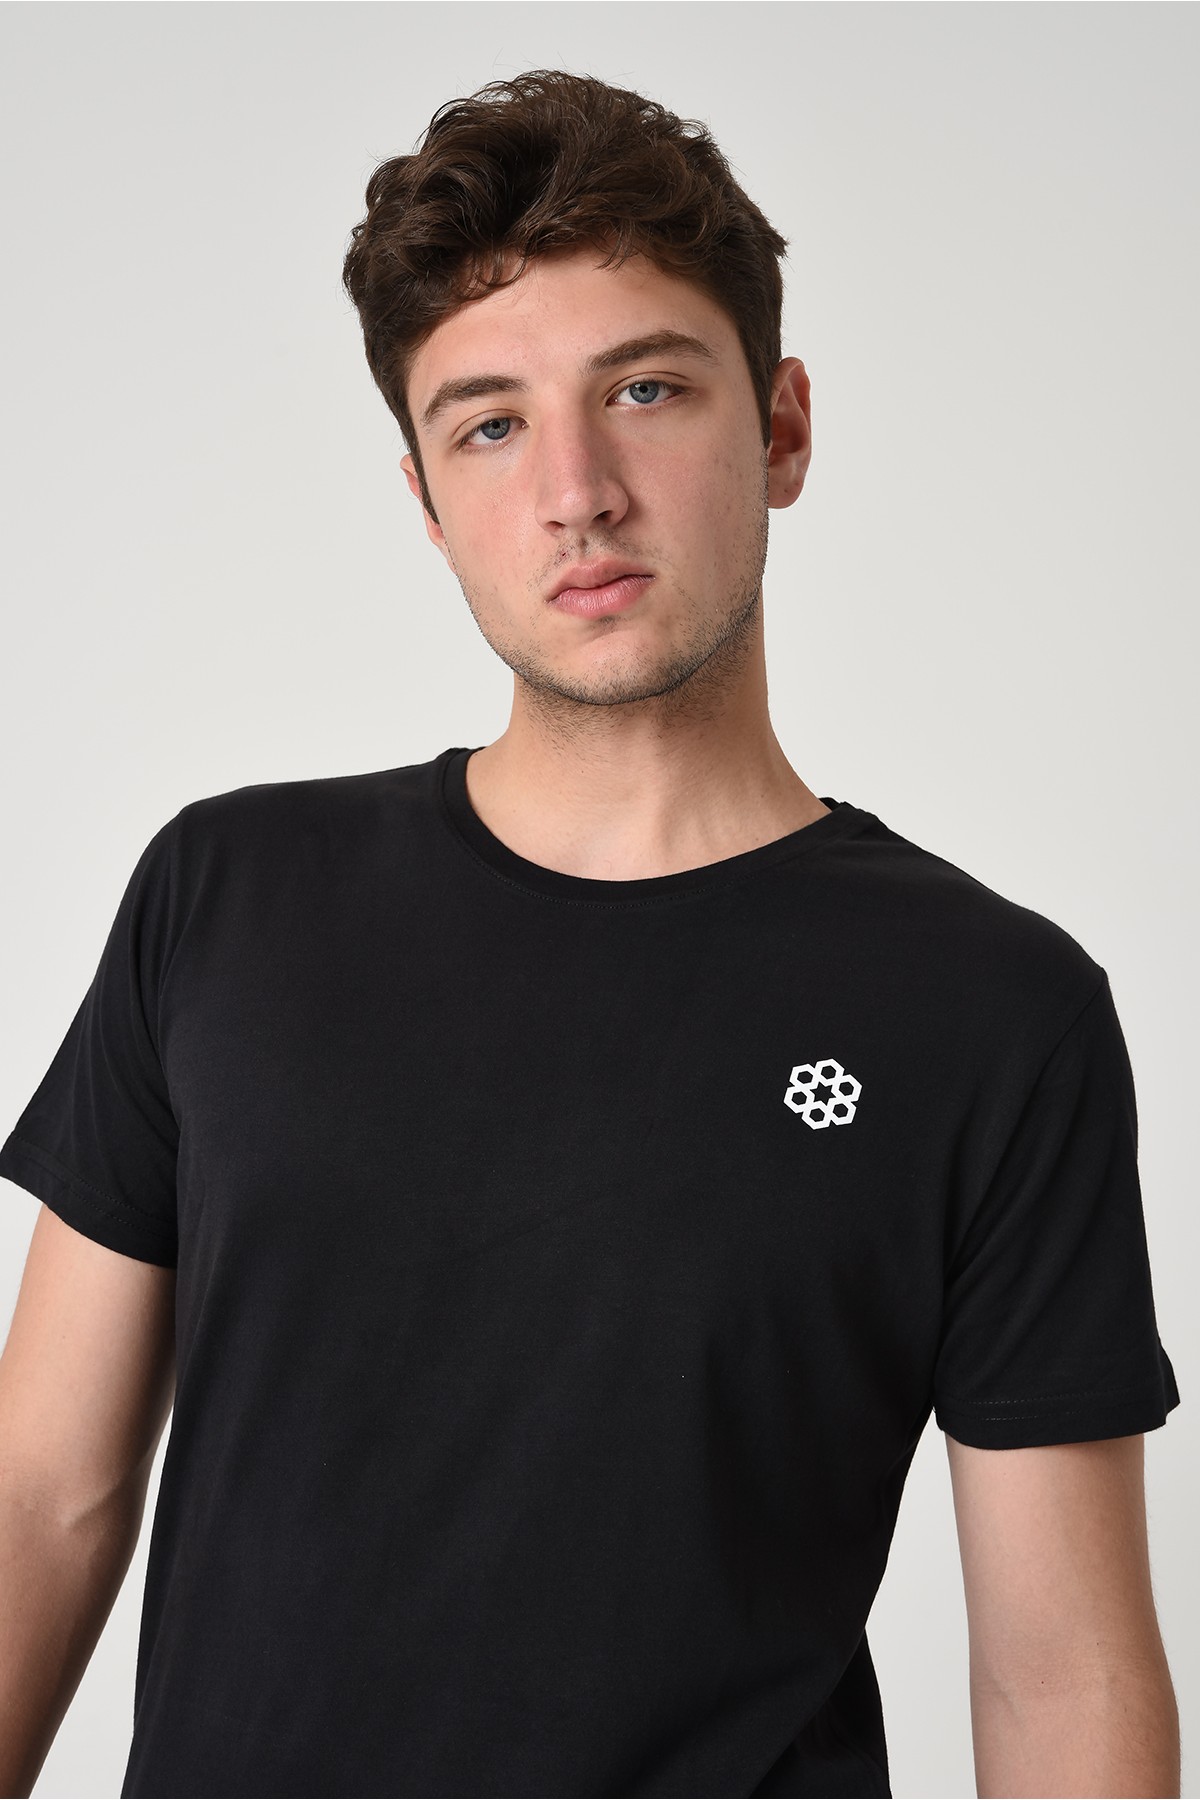 Dembu Tasarım Pamuk Baskılı Siyah T-shirt